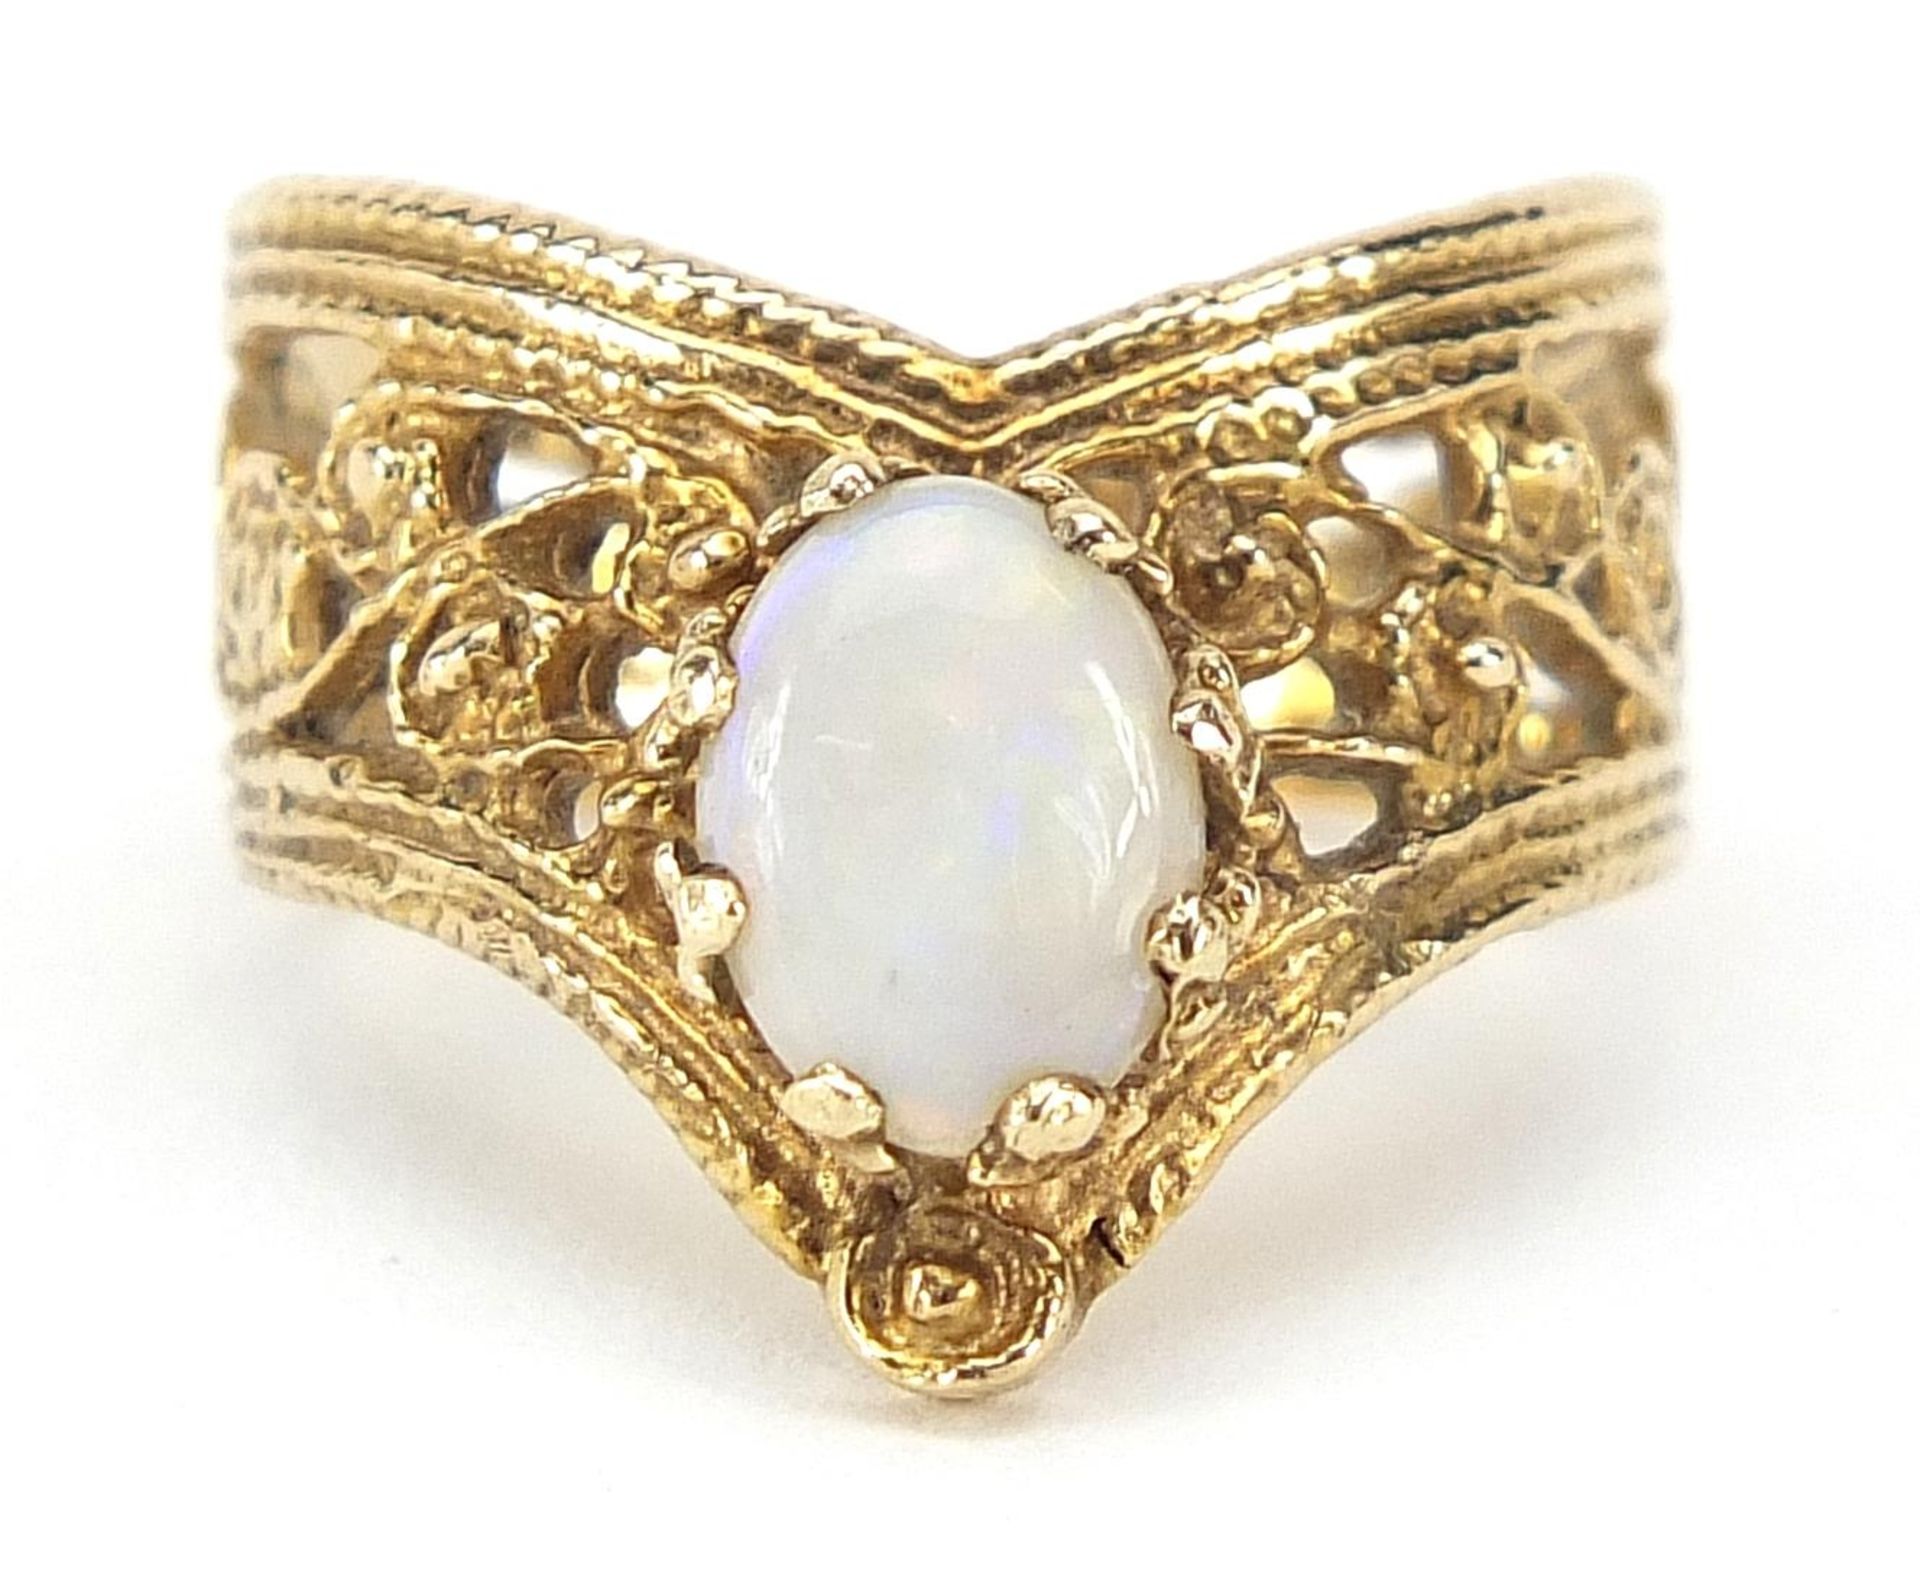 9ct gold pierced herringbone and cabochon opal ring, size L/M, 3.6g